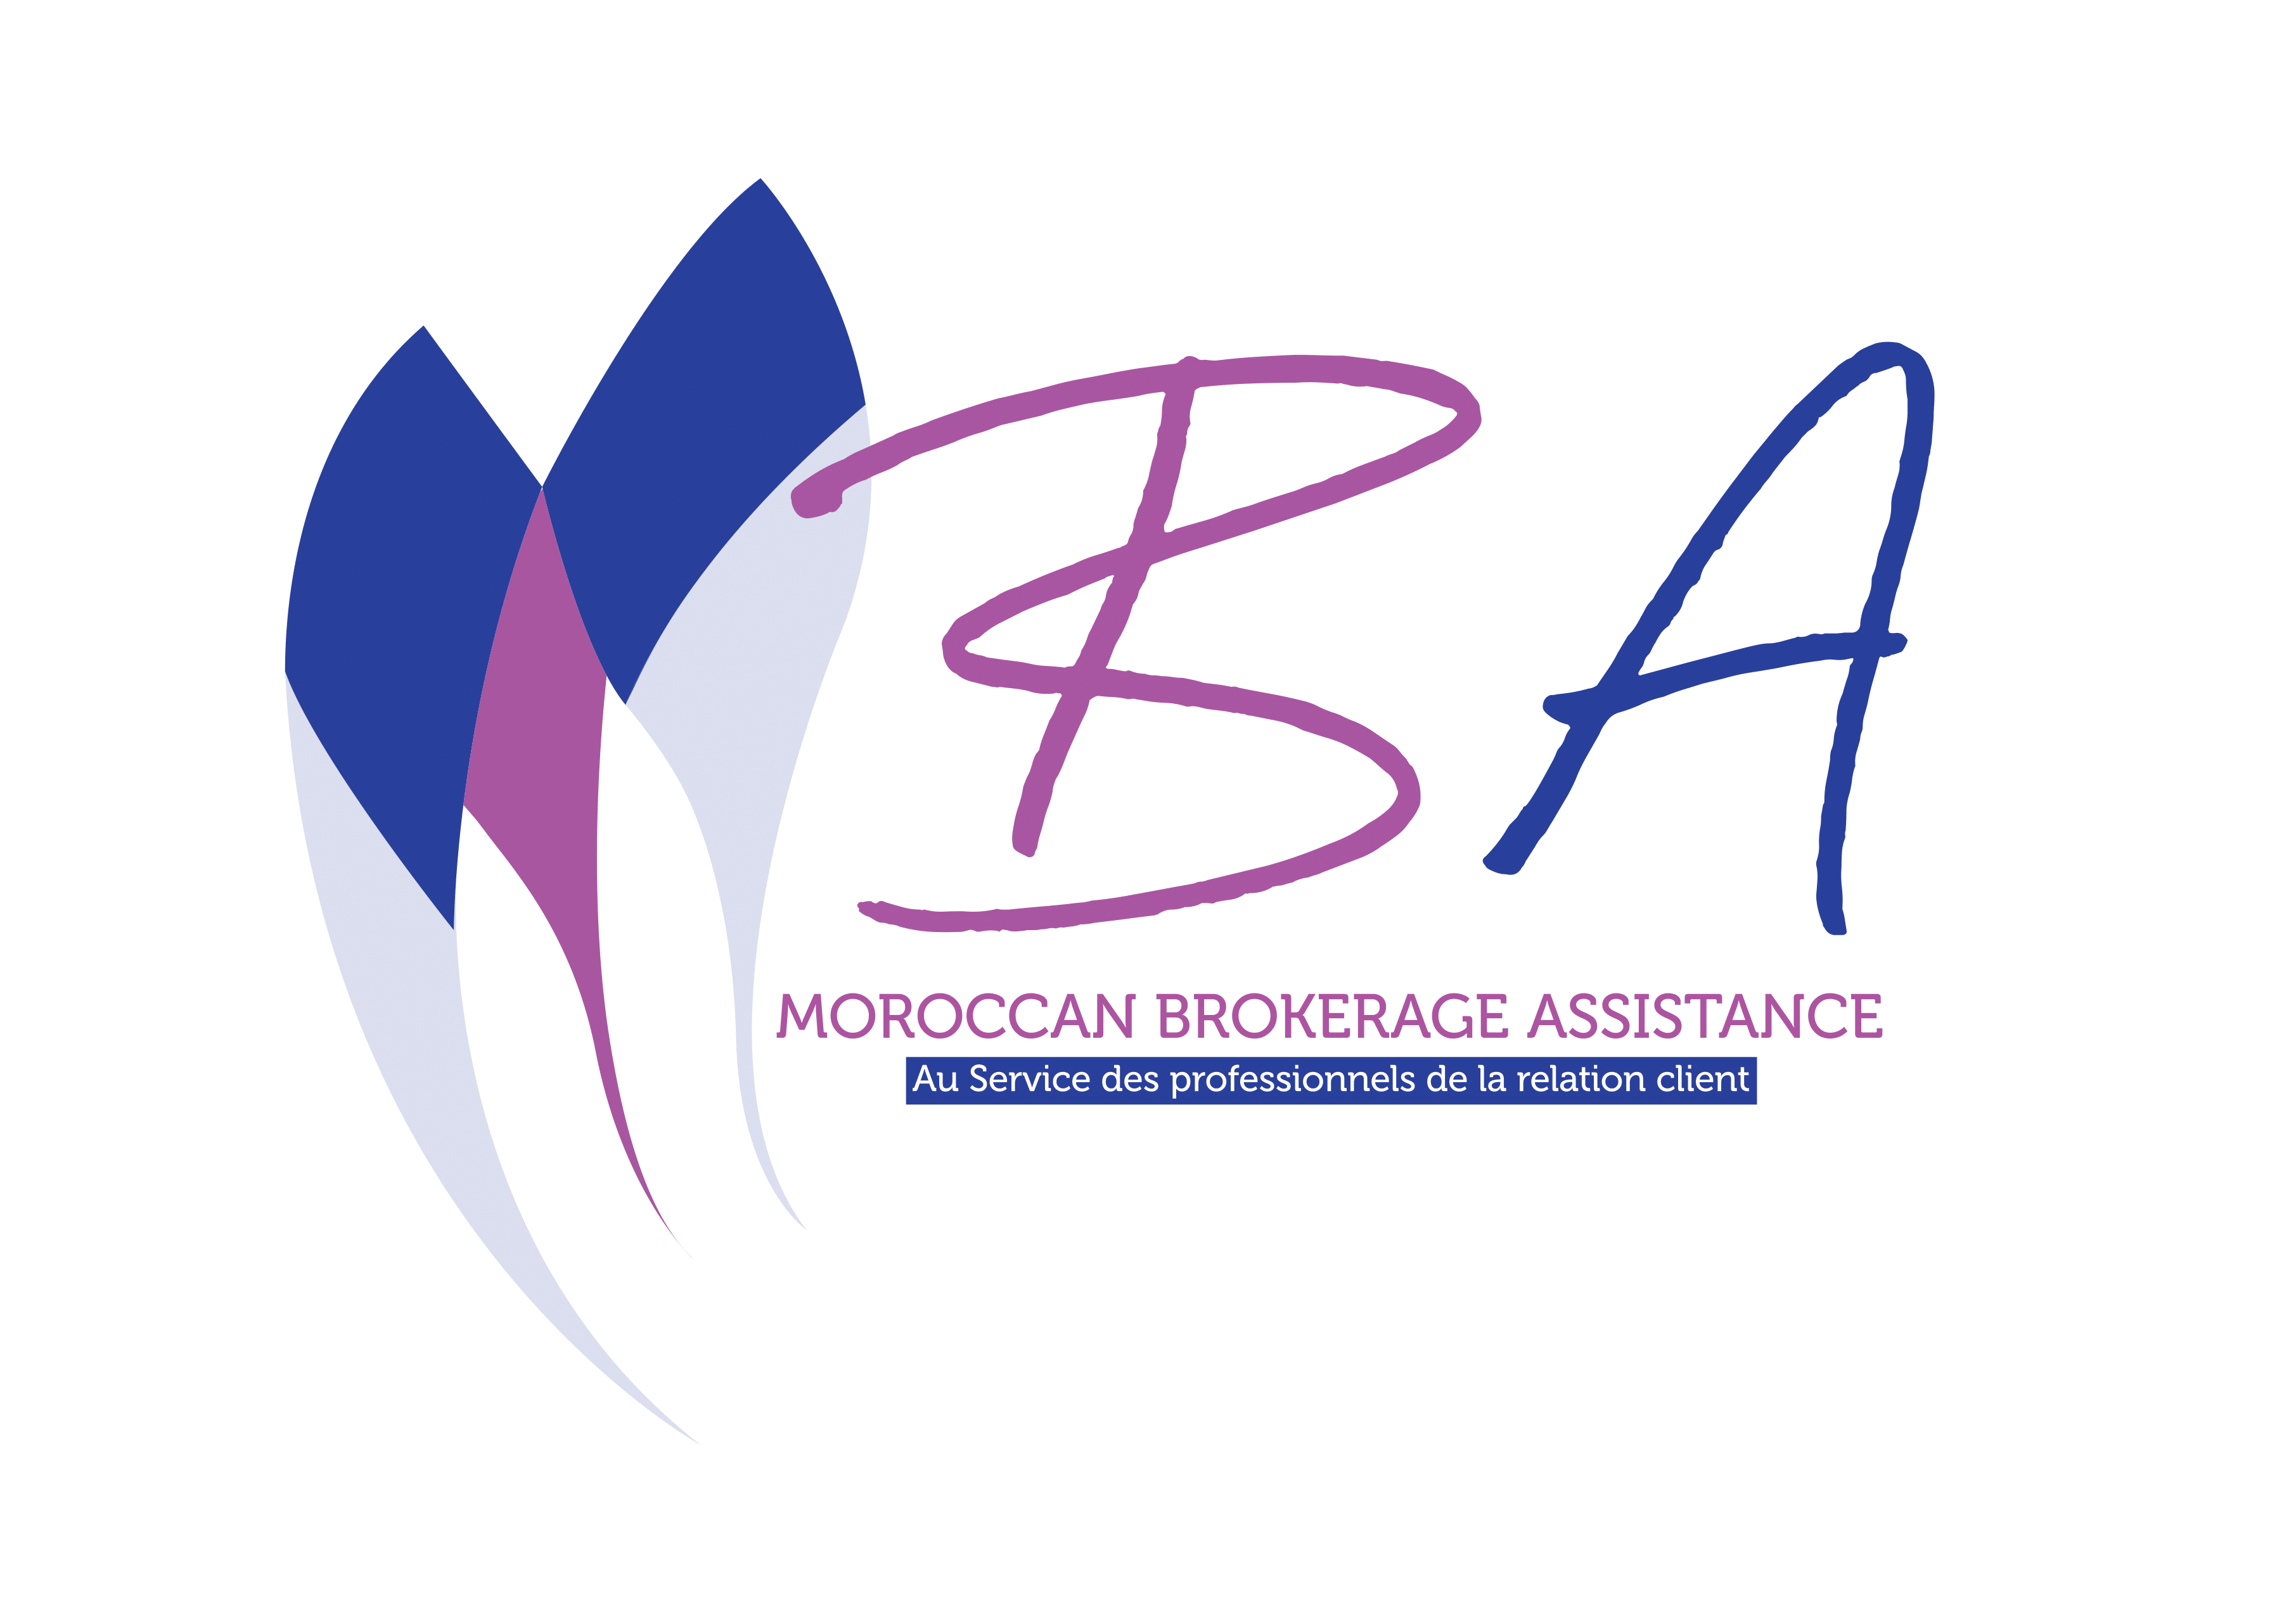 Moroccan Brokerage Assistance